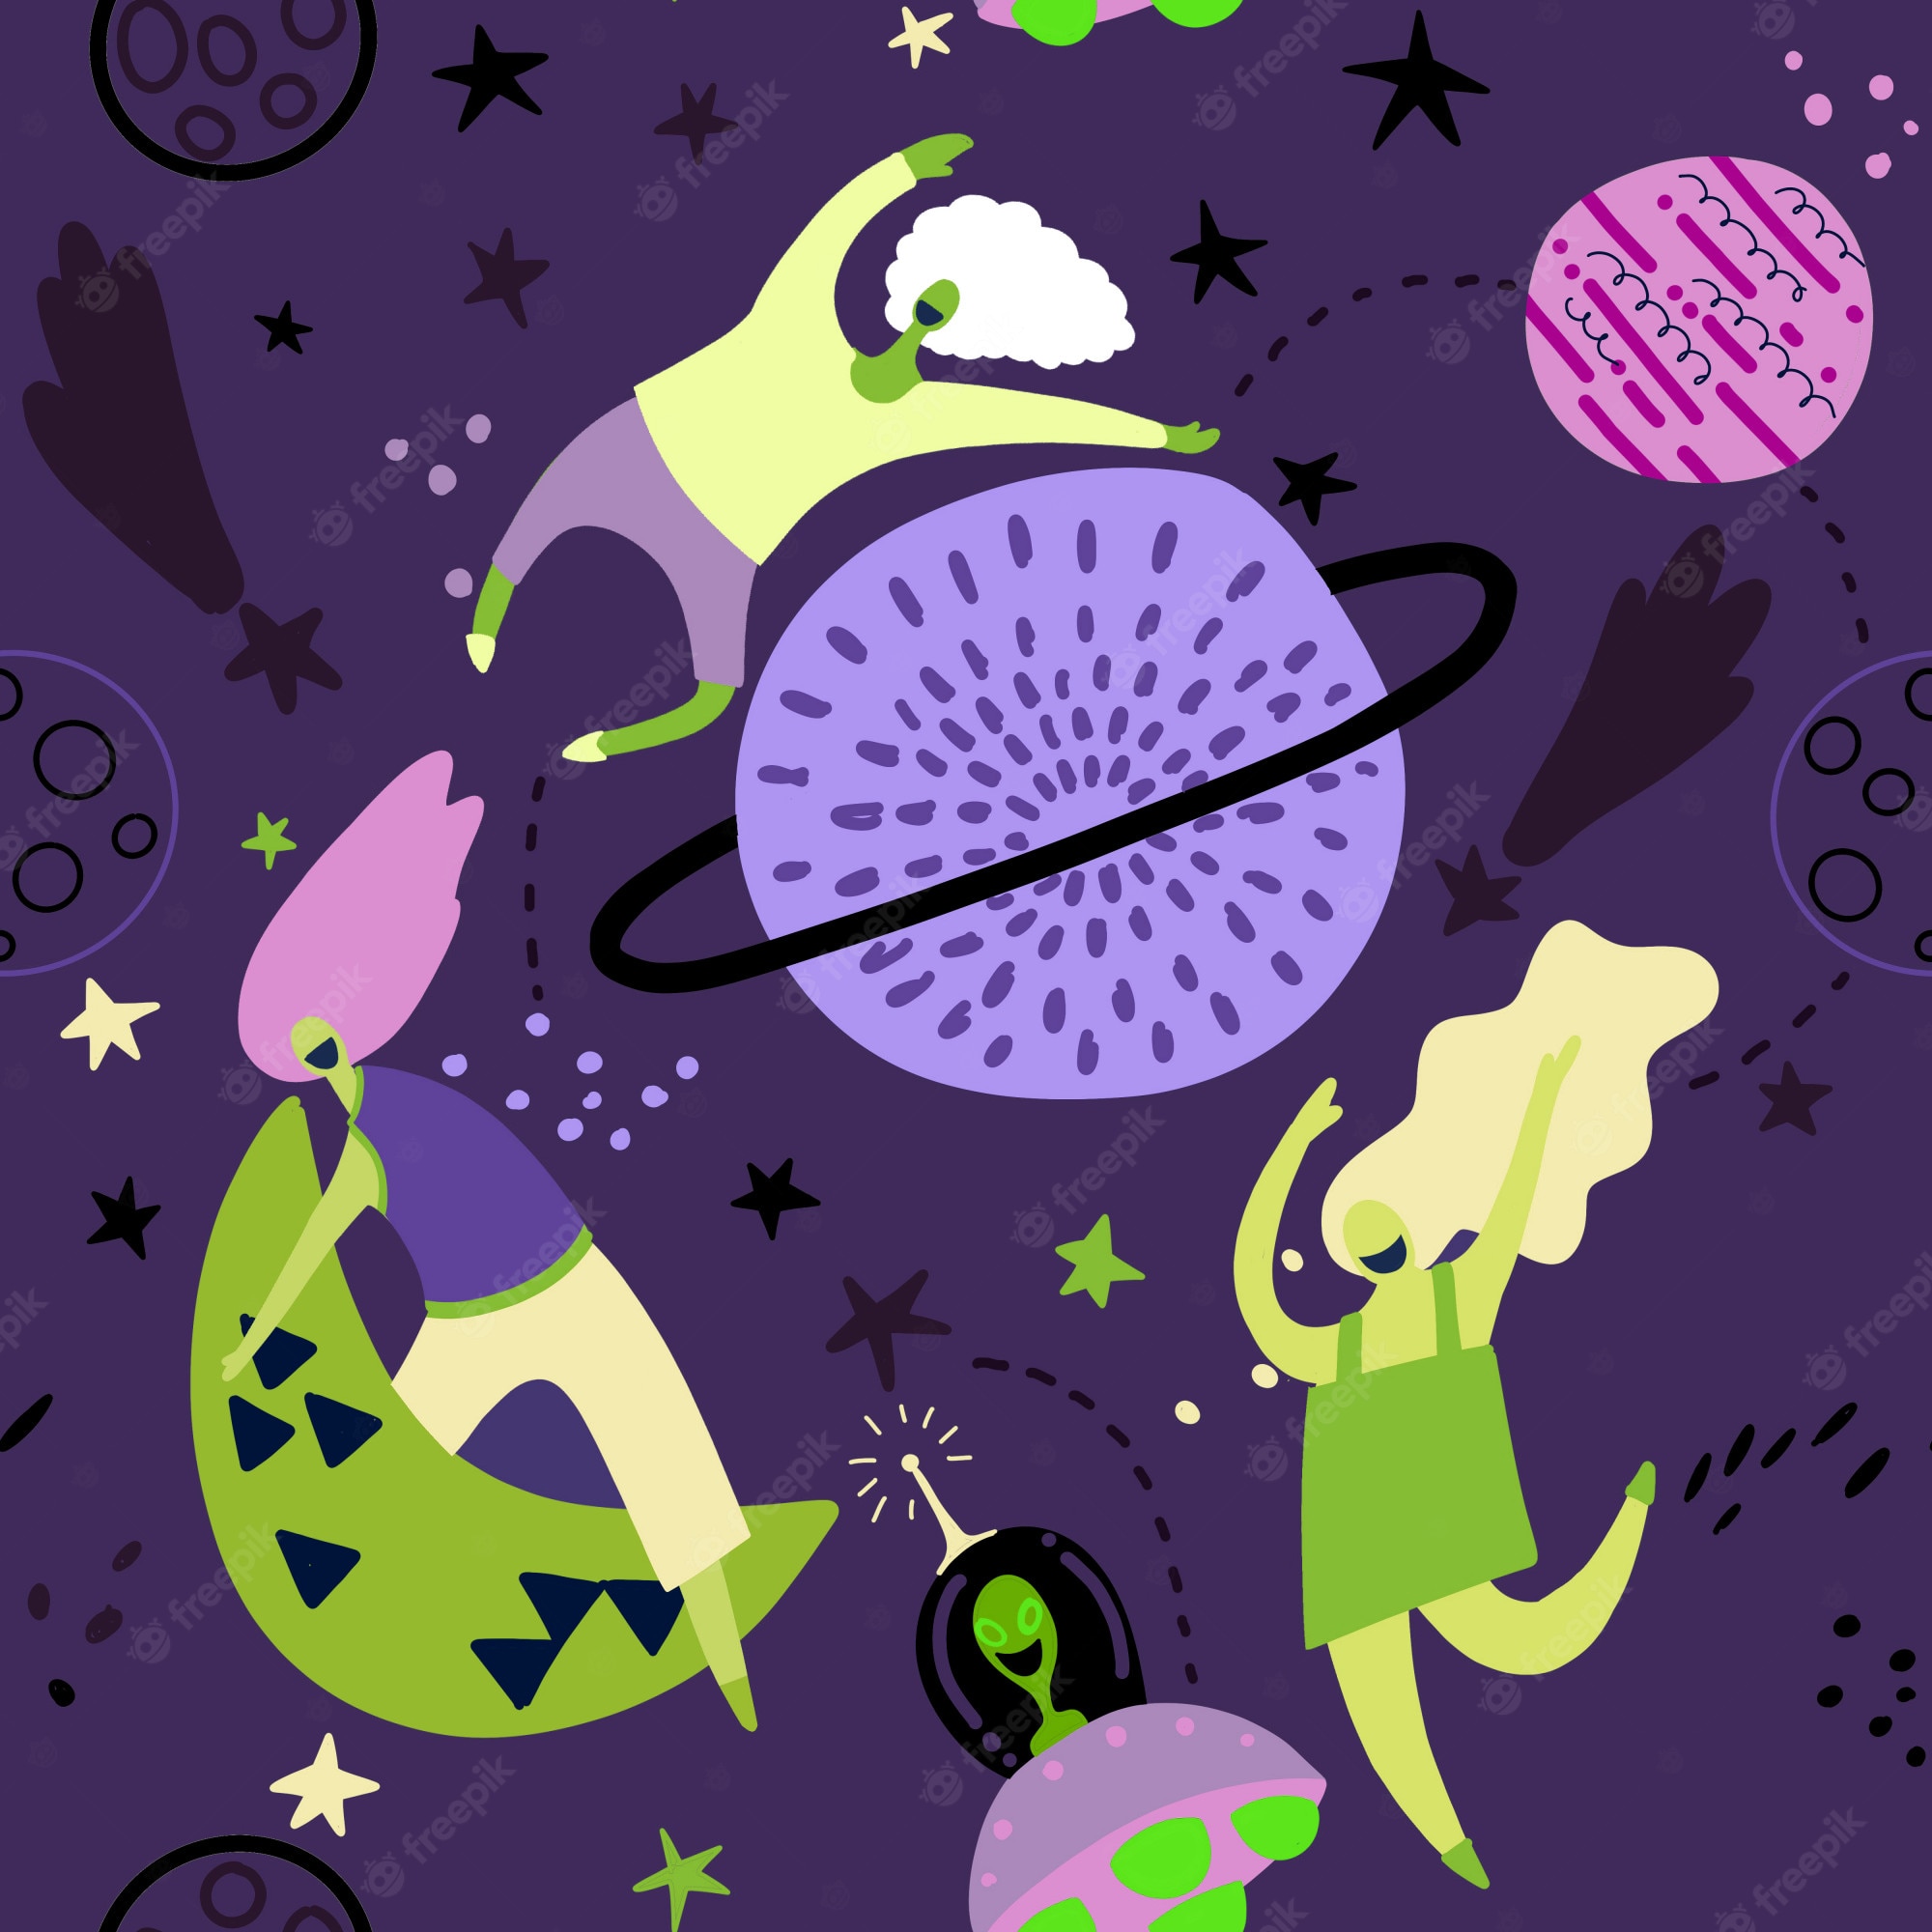 Alien wallpaper Vectors & Illustrations for Free Download